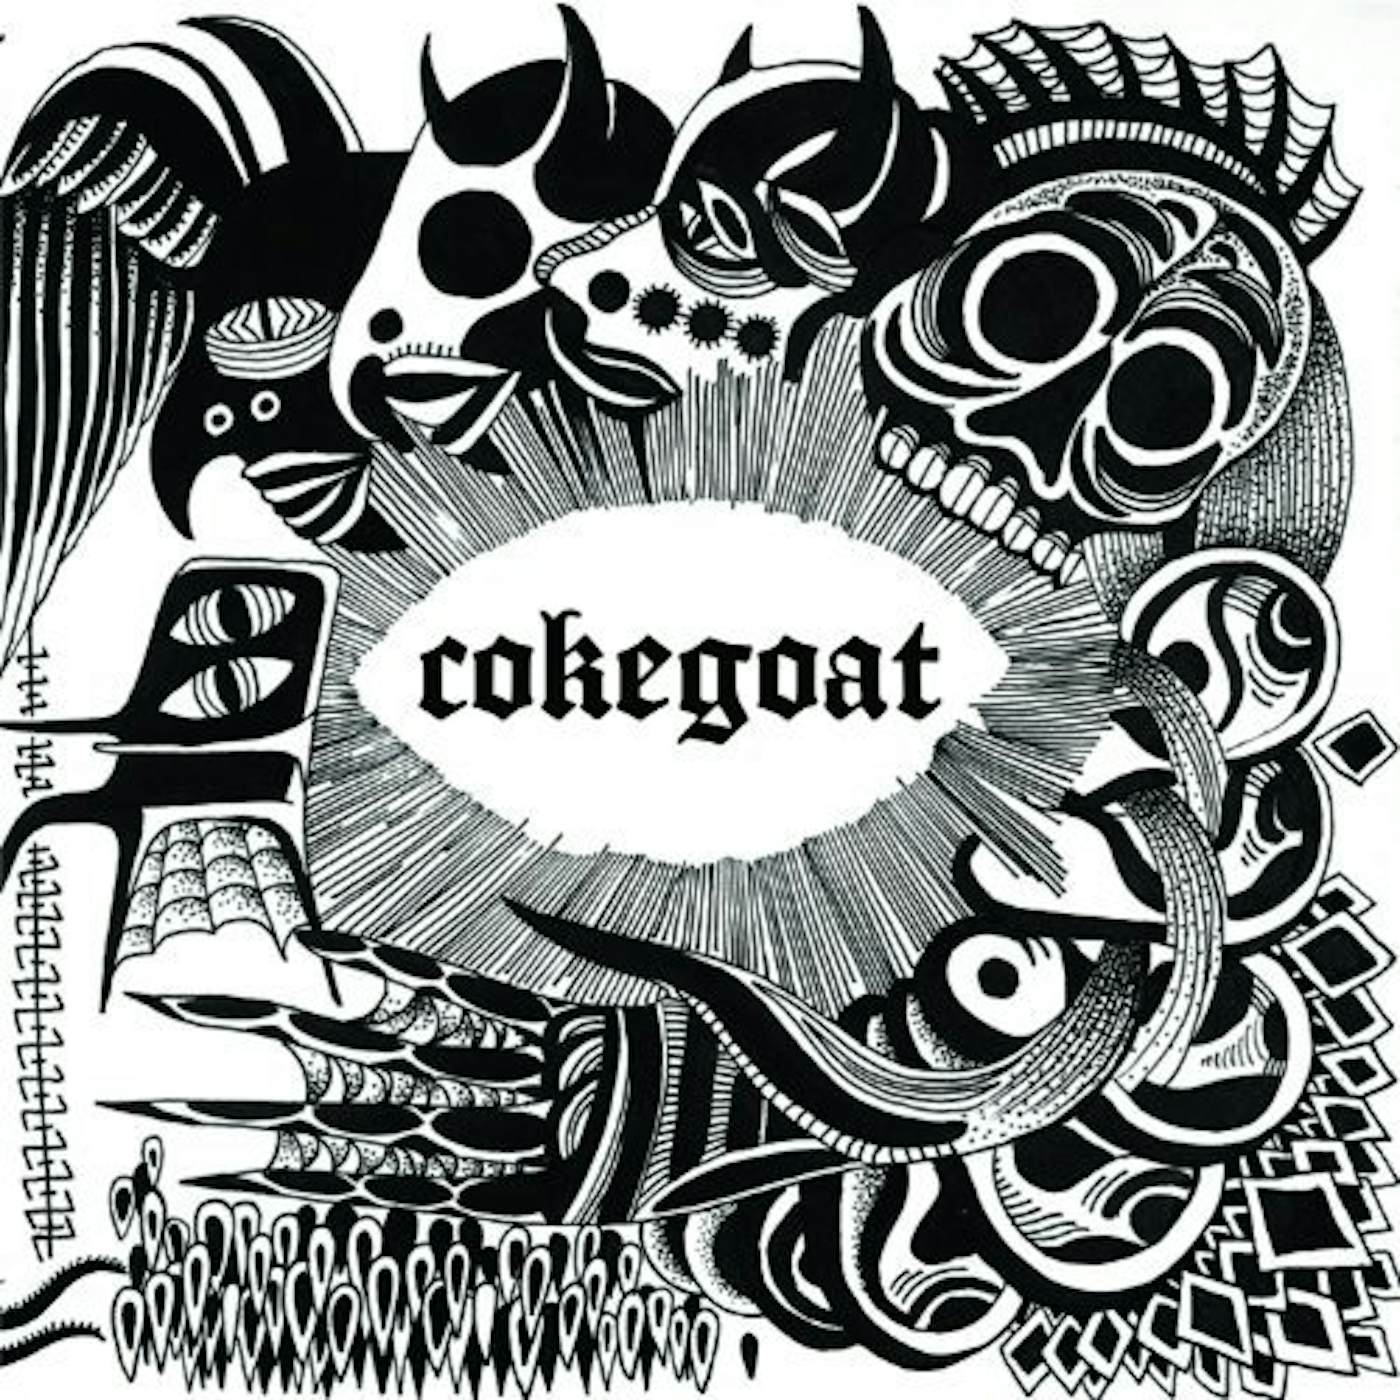 Cokegoat Vessel Vinyl Record